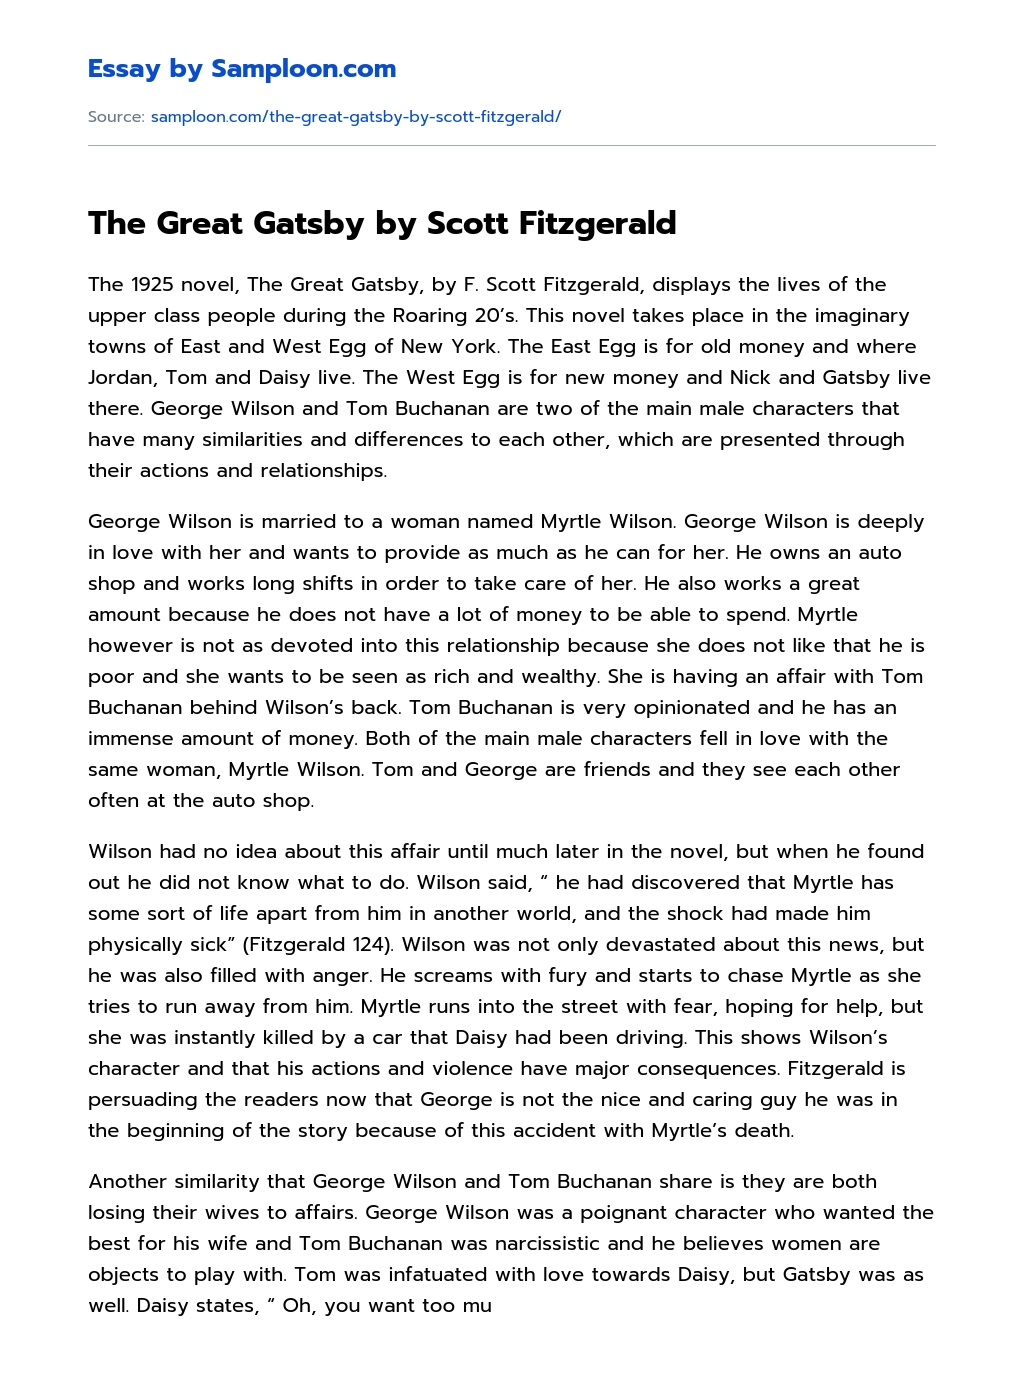 The Great Gatsby by Scott Fitzgerald essay